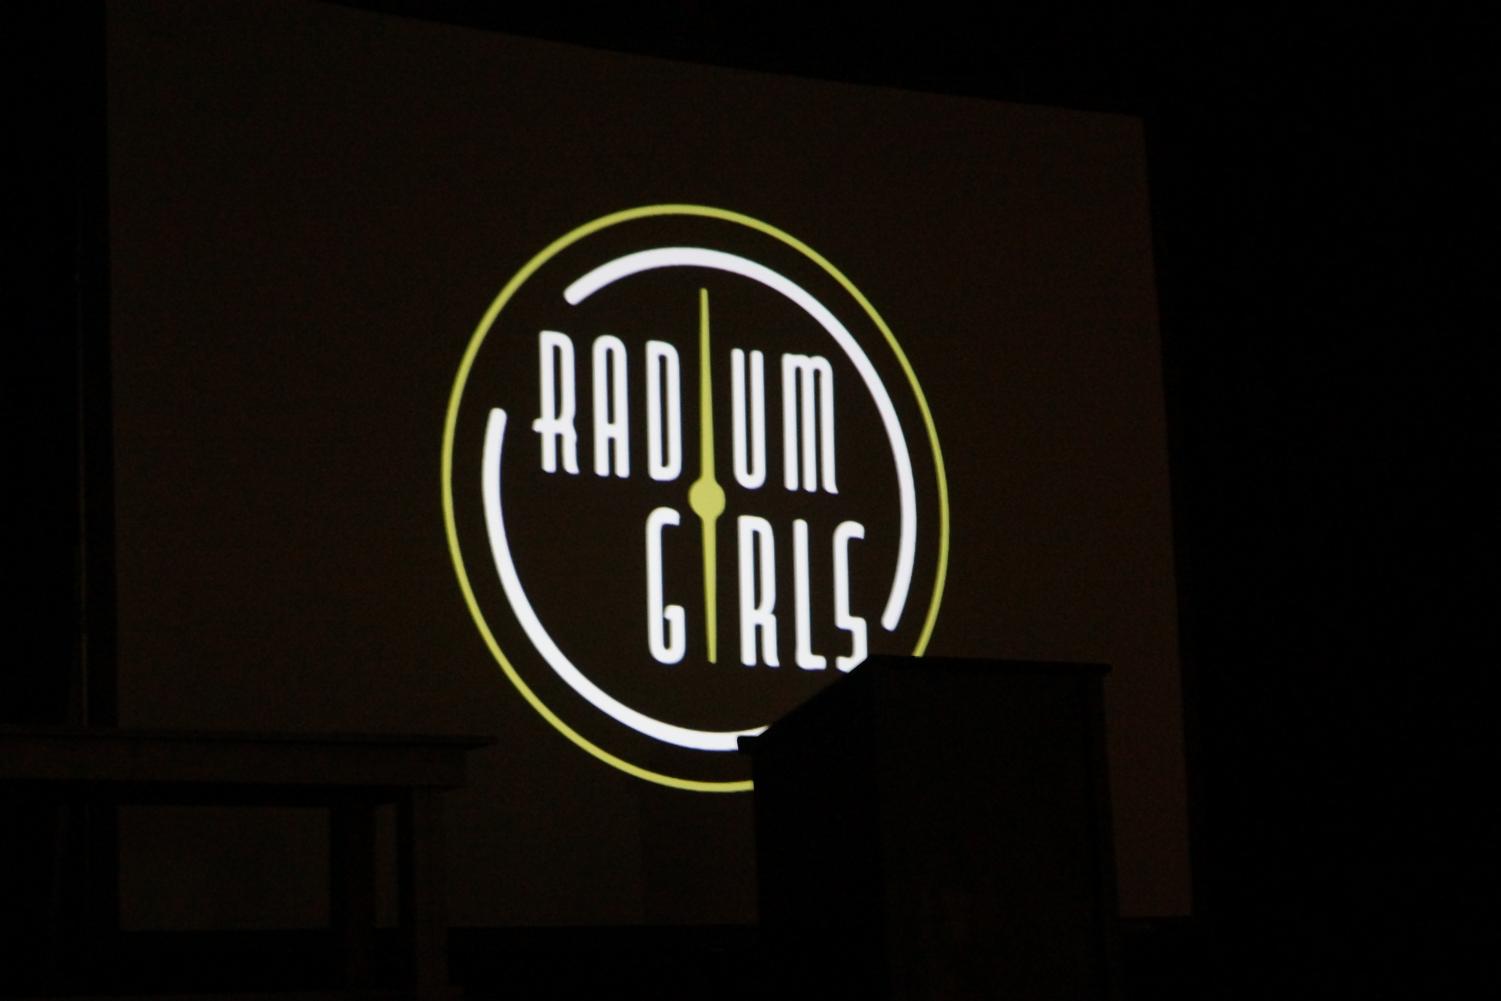 Theater+department+presents+Radium+Girls